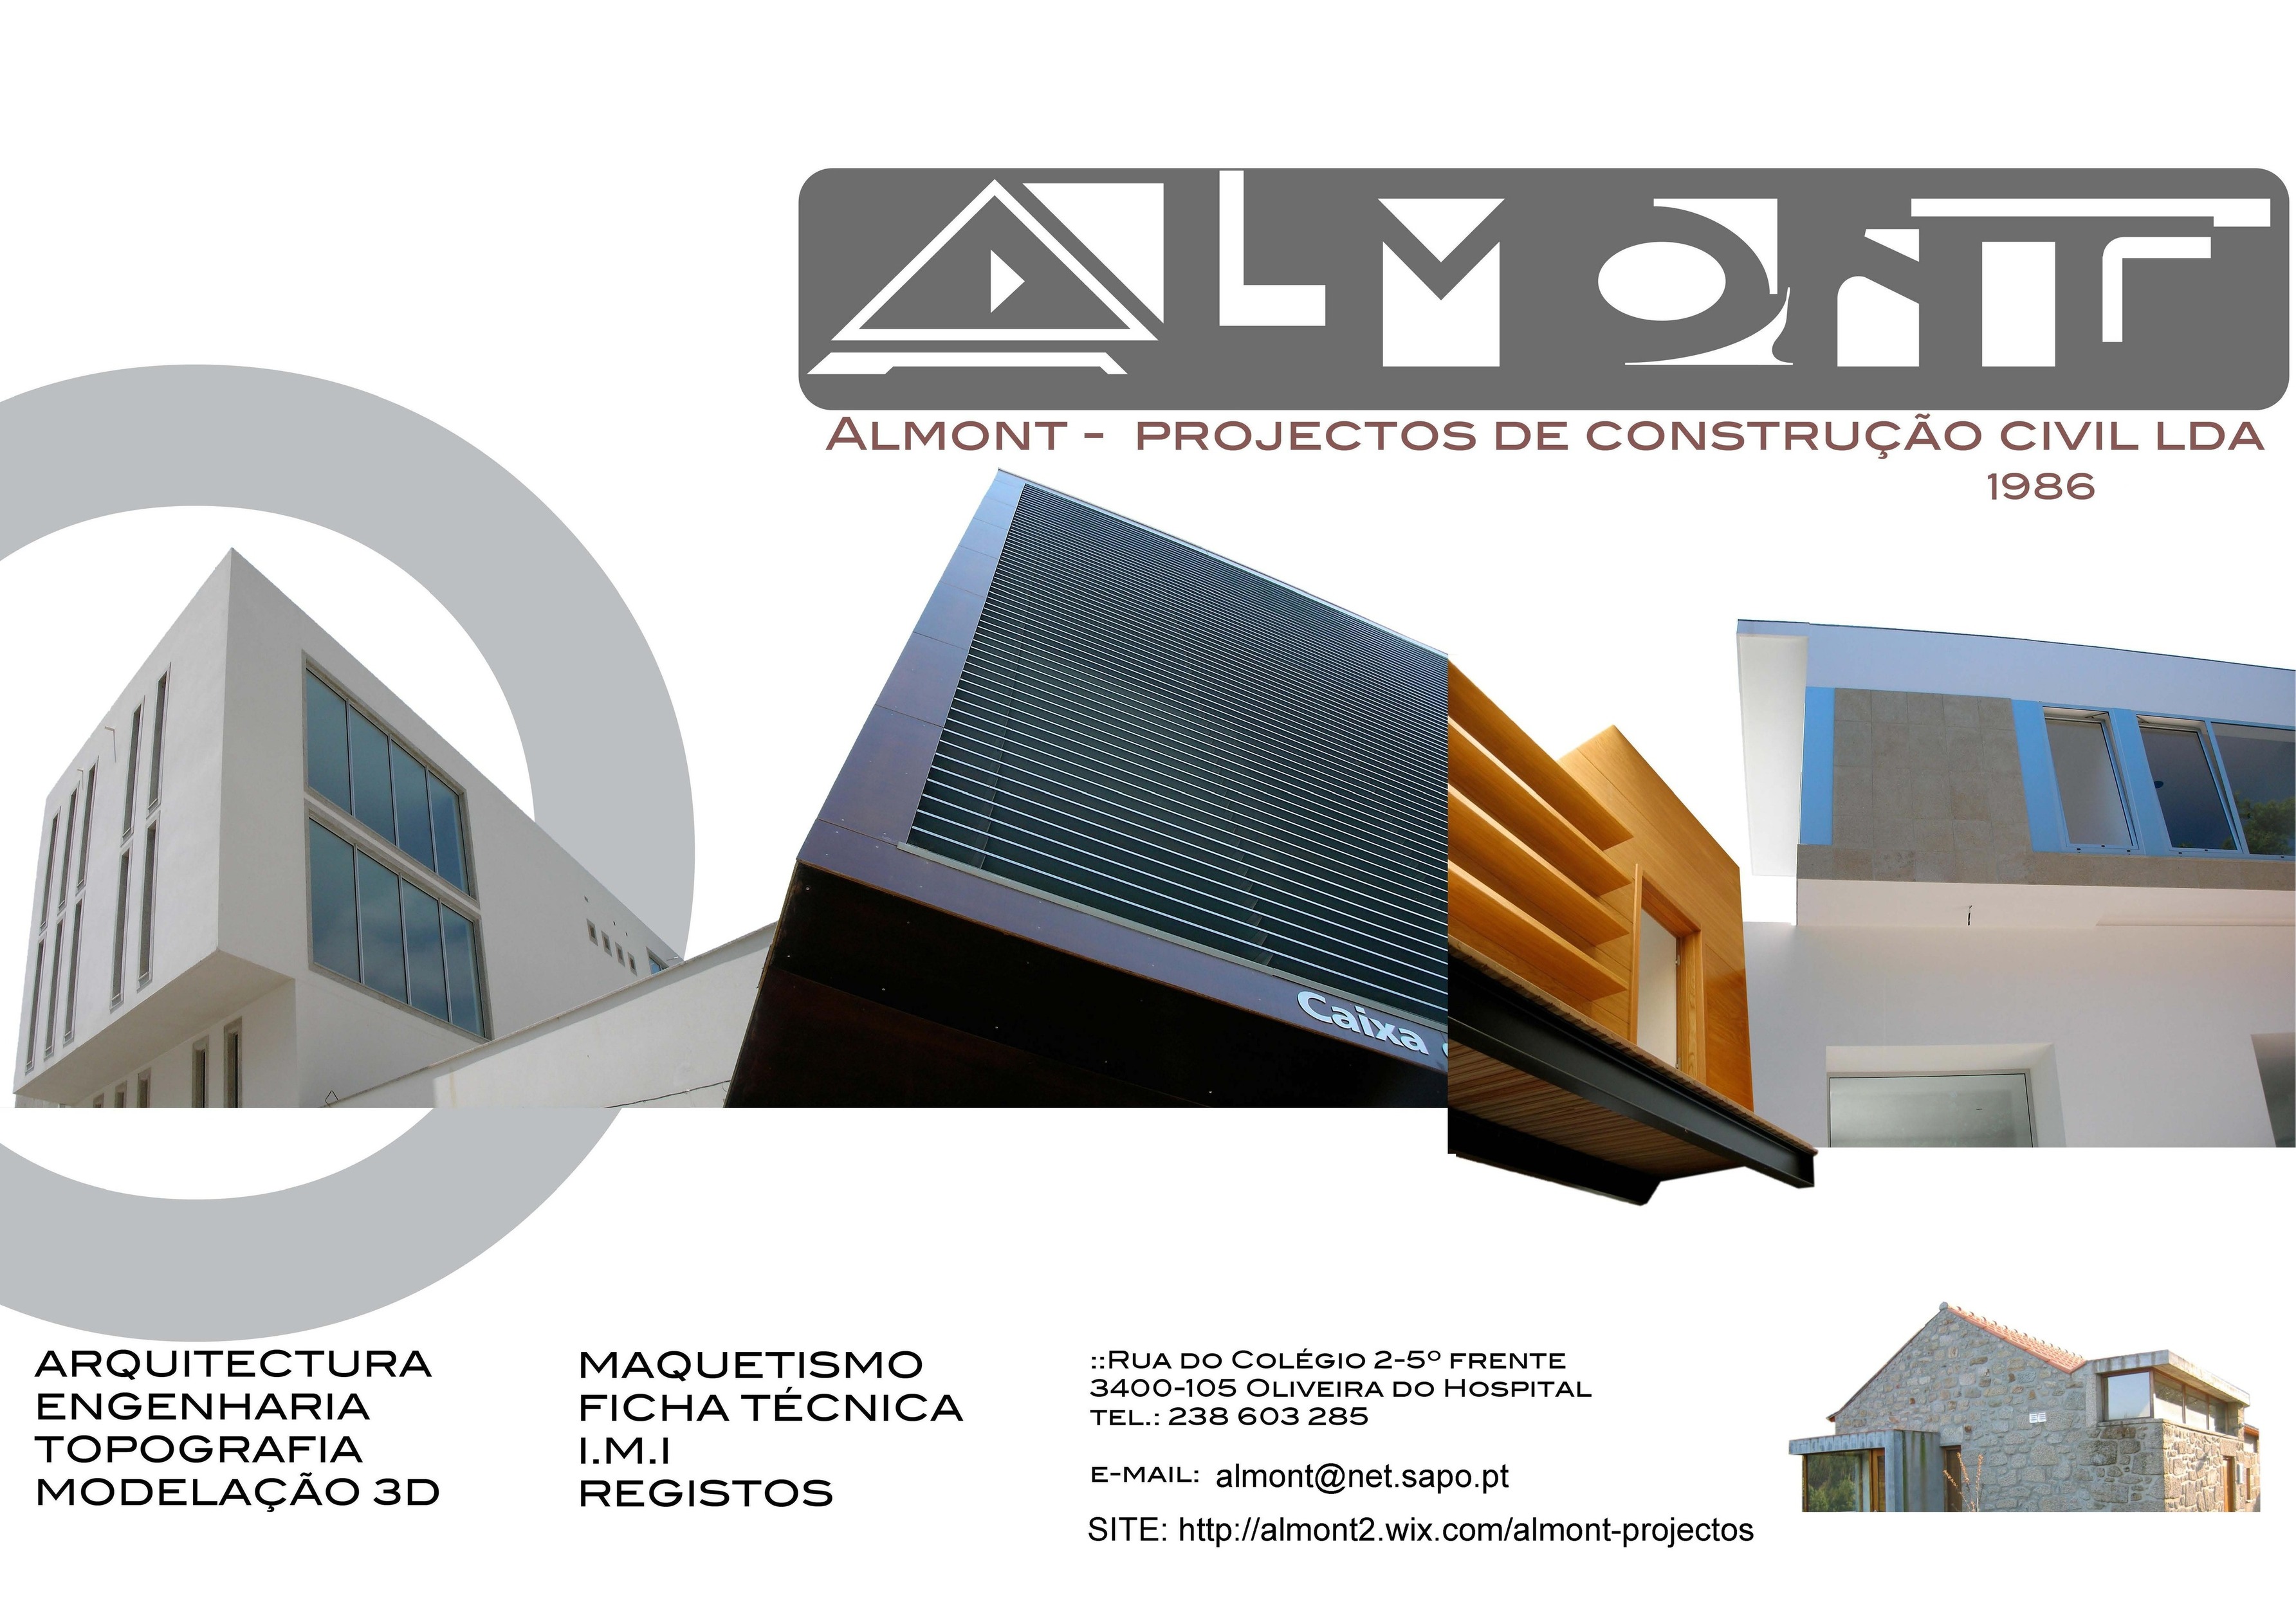 Almont – Projectos de Construção Civil, Lda.